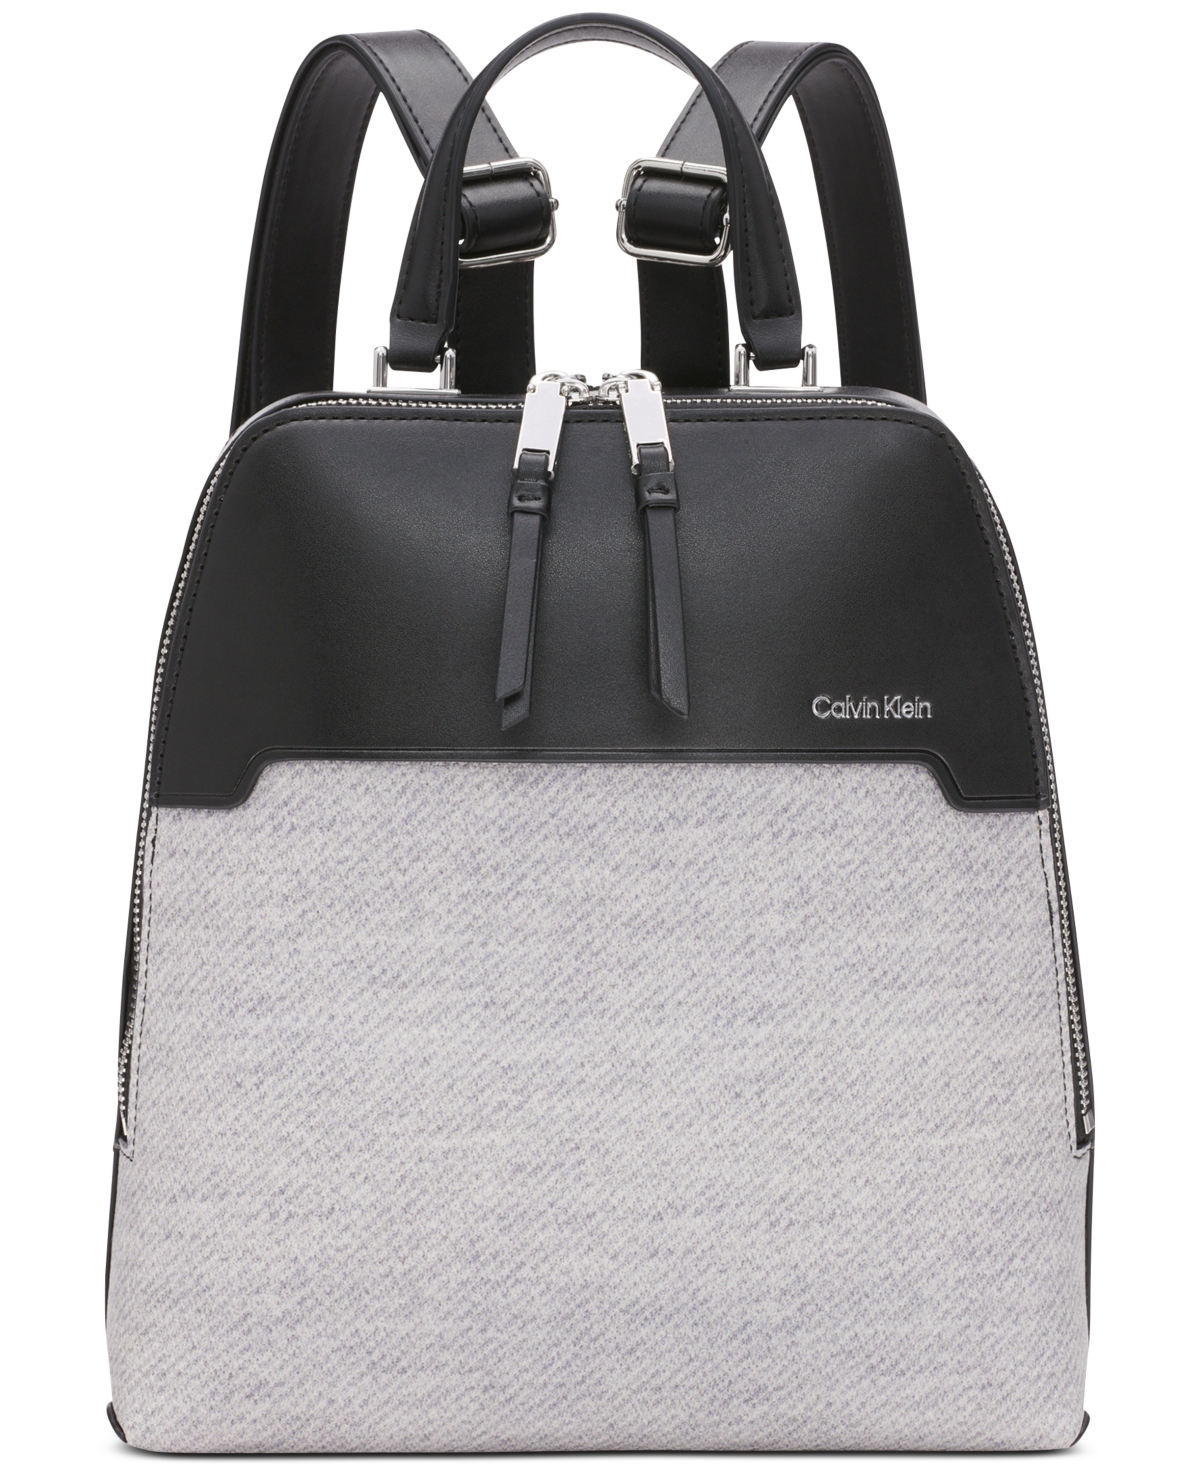 Calvin Klein Jasper Faux Leather Double Top Handle Bag in Black